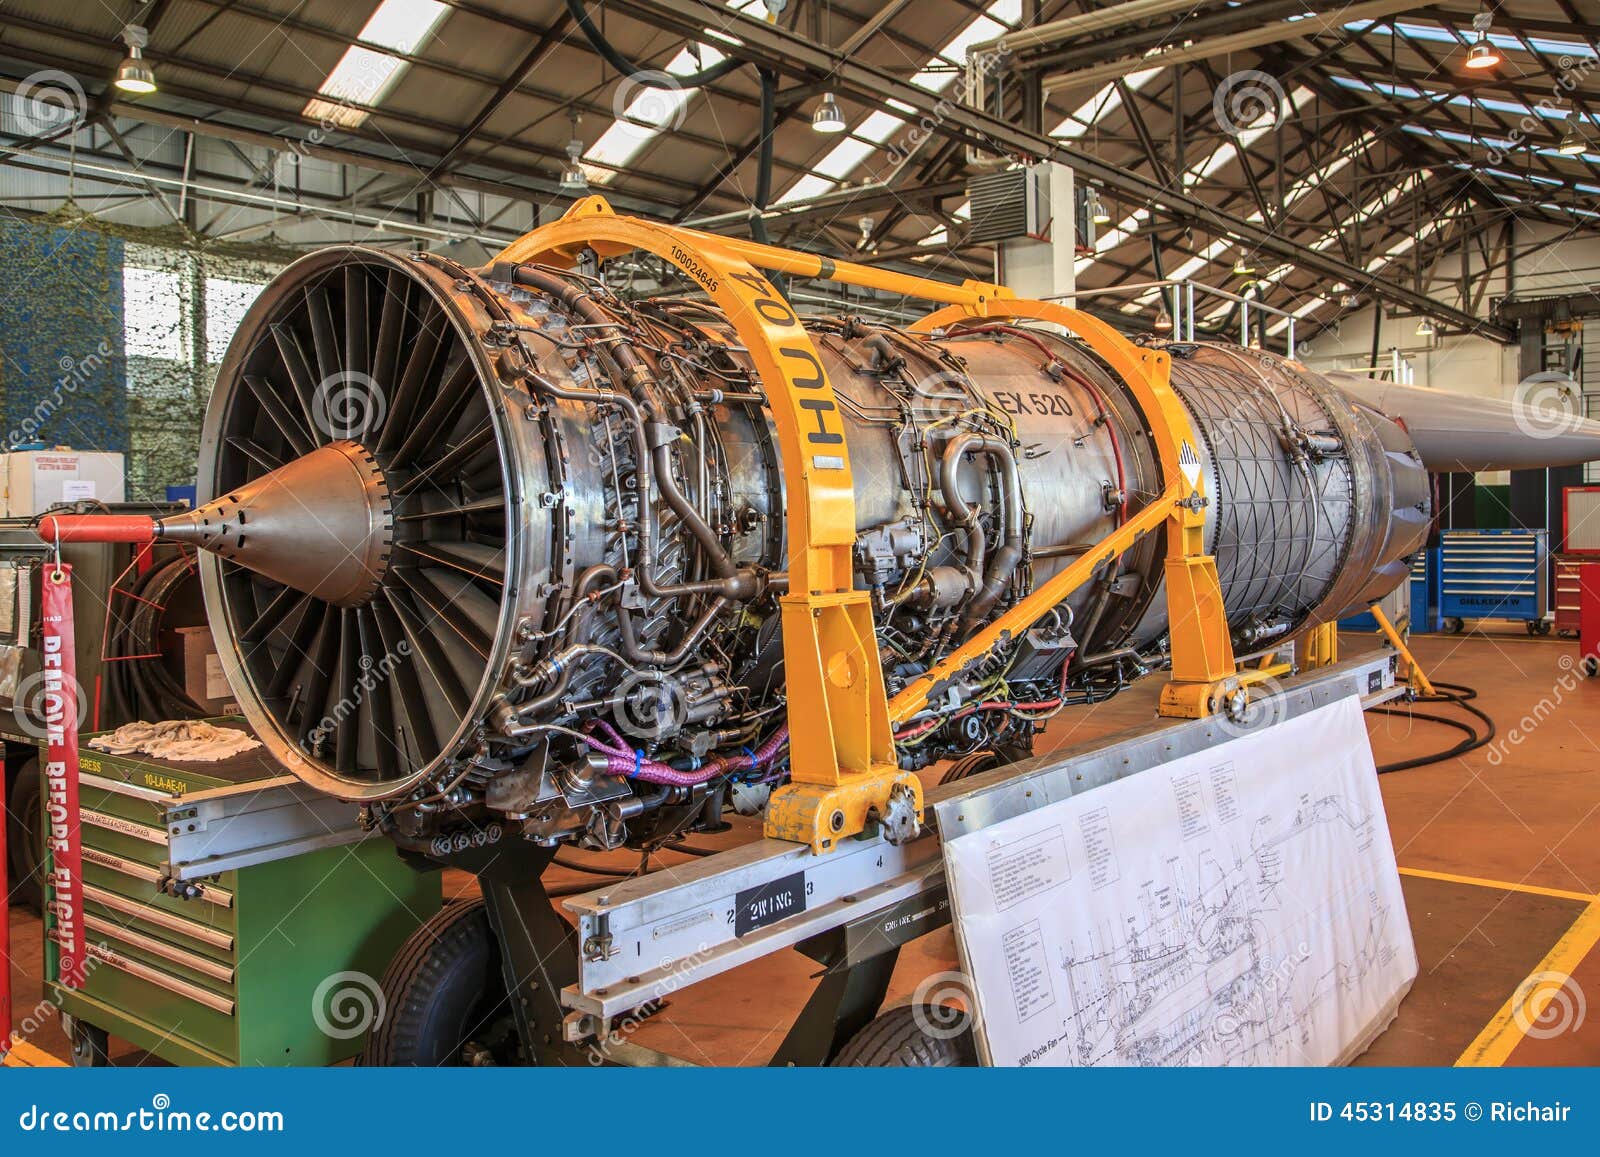 Jet Fighter Engine Editorial Image Image Of Maintenance 45314835